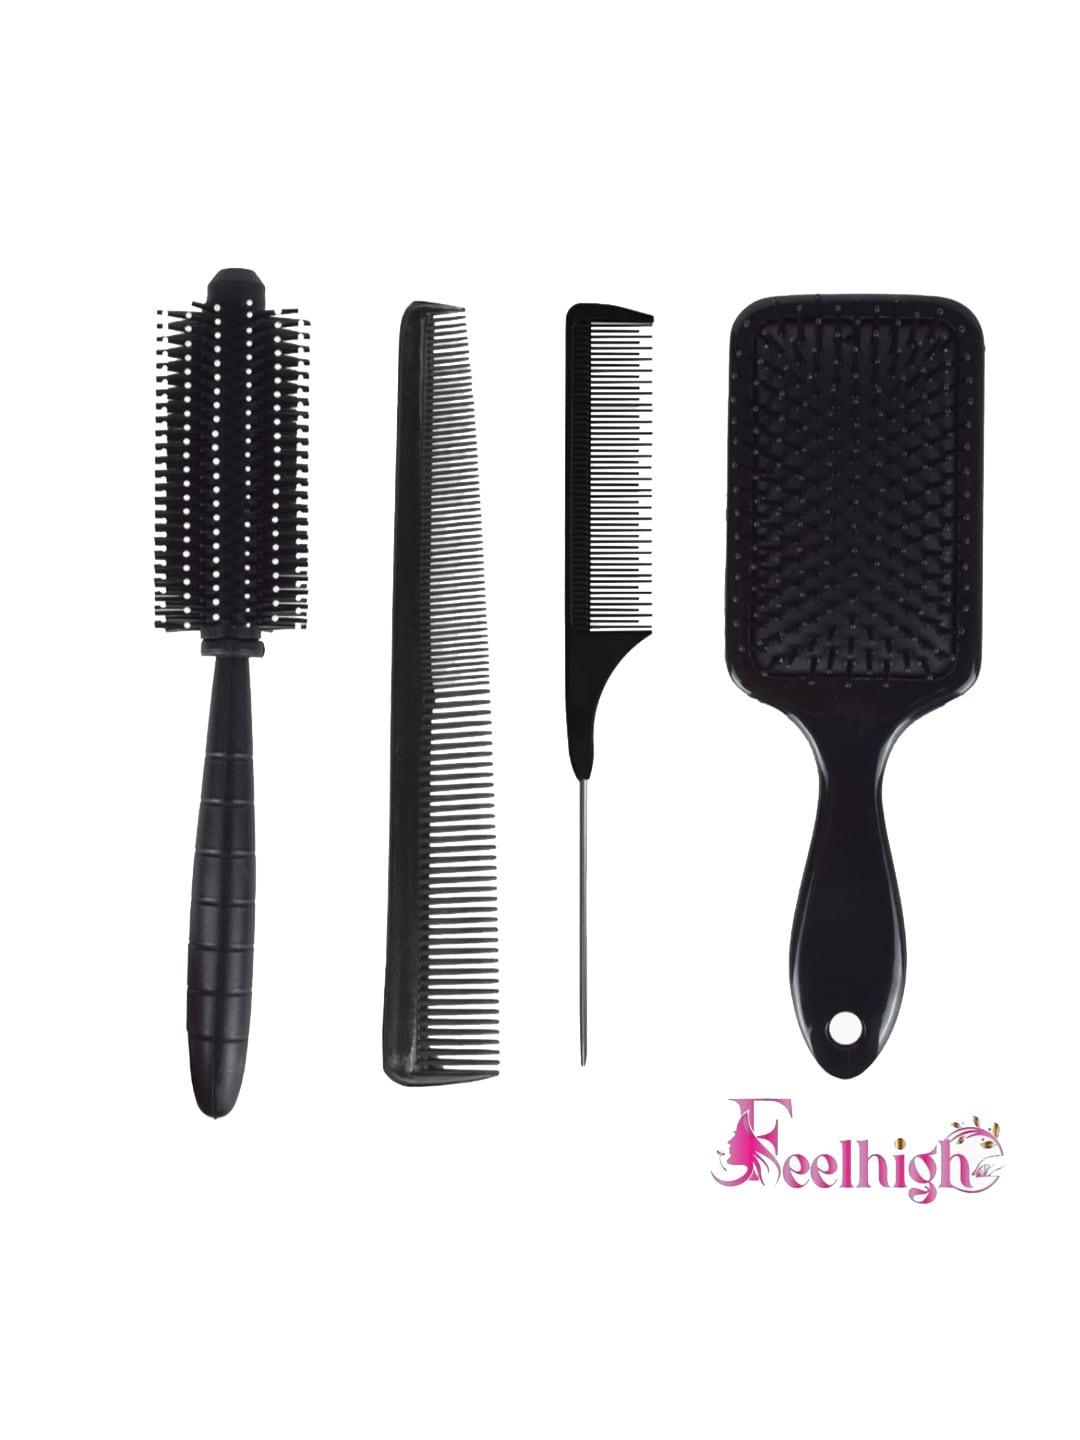 feelhigh-set-of-4-carbon-fiber-barber-hair-cutting-styling-brush-&-combs---black